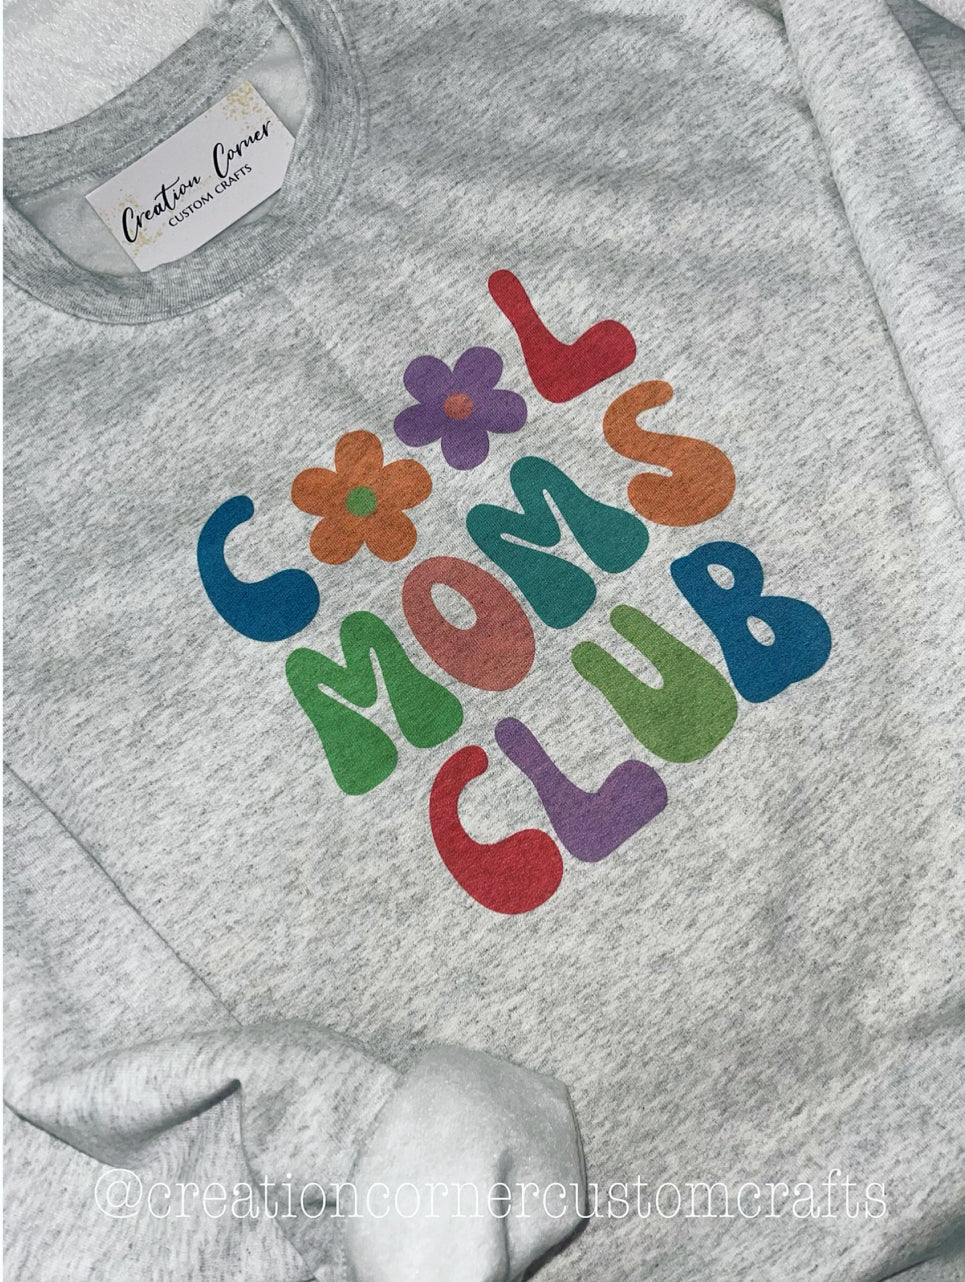 Cool Moms Club Crewneck Sweatshirt